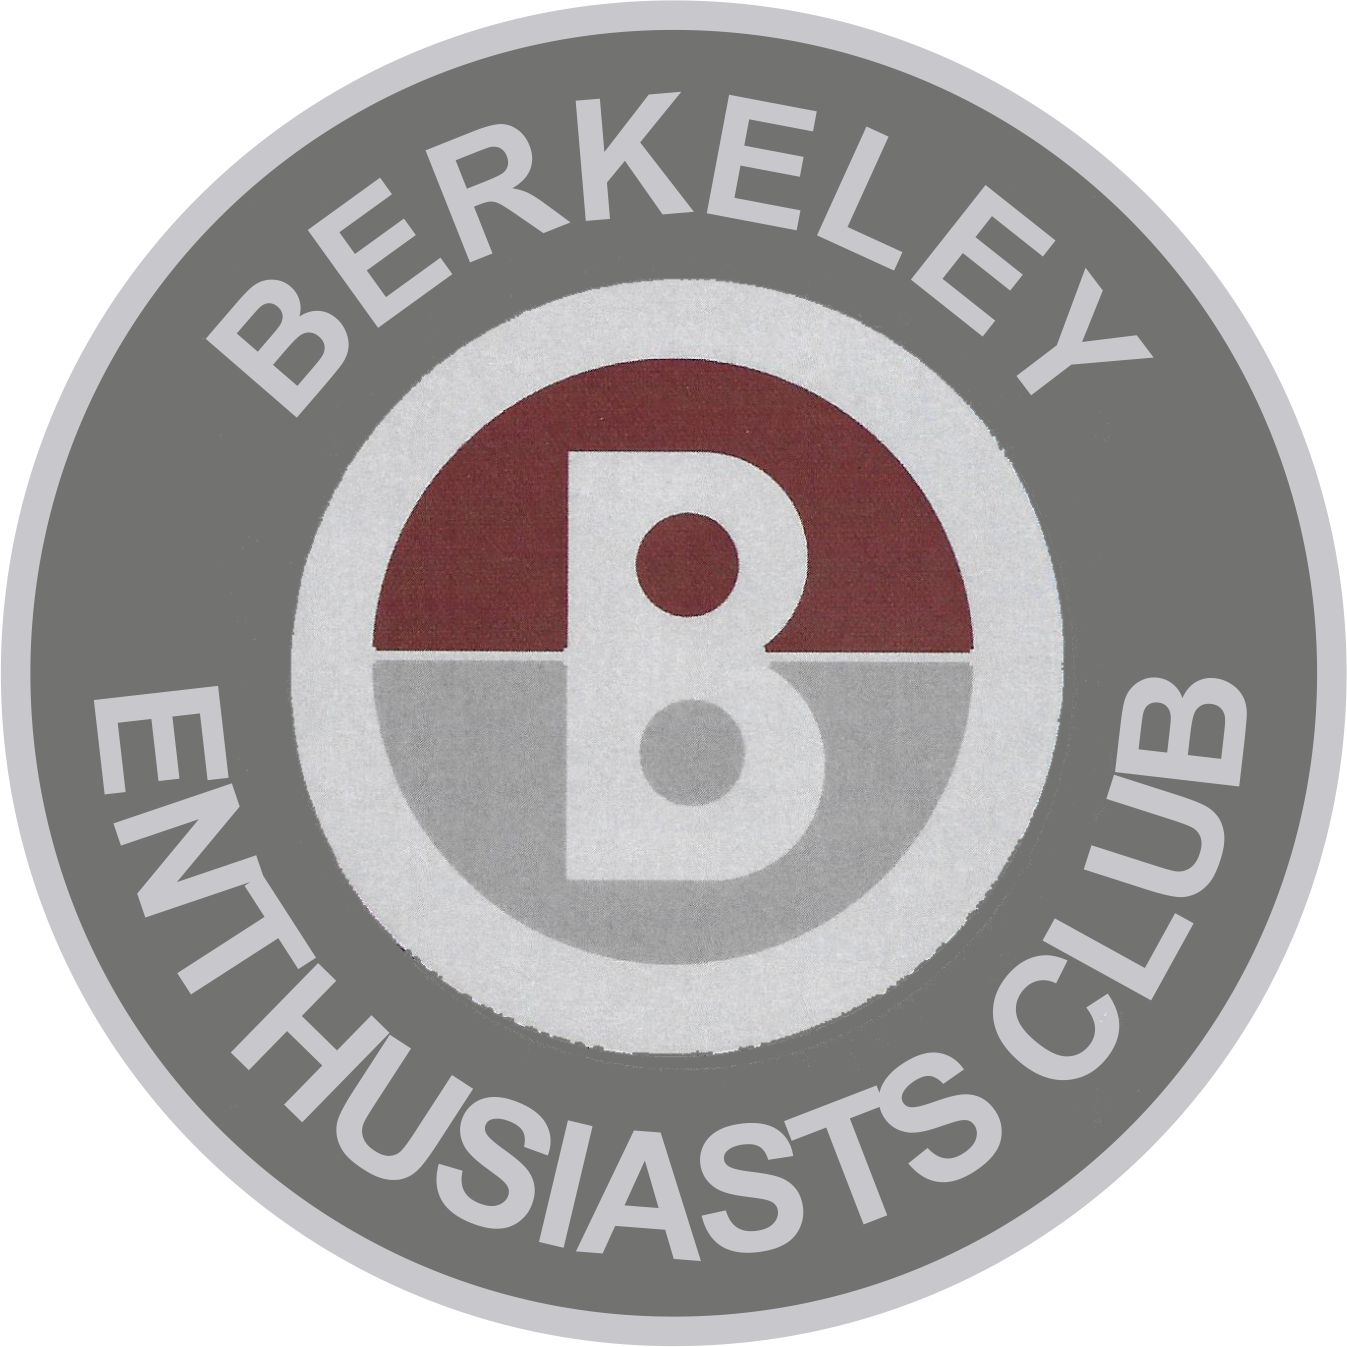 Berkeley Enthusiasts Club